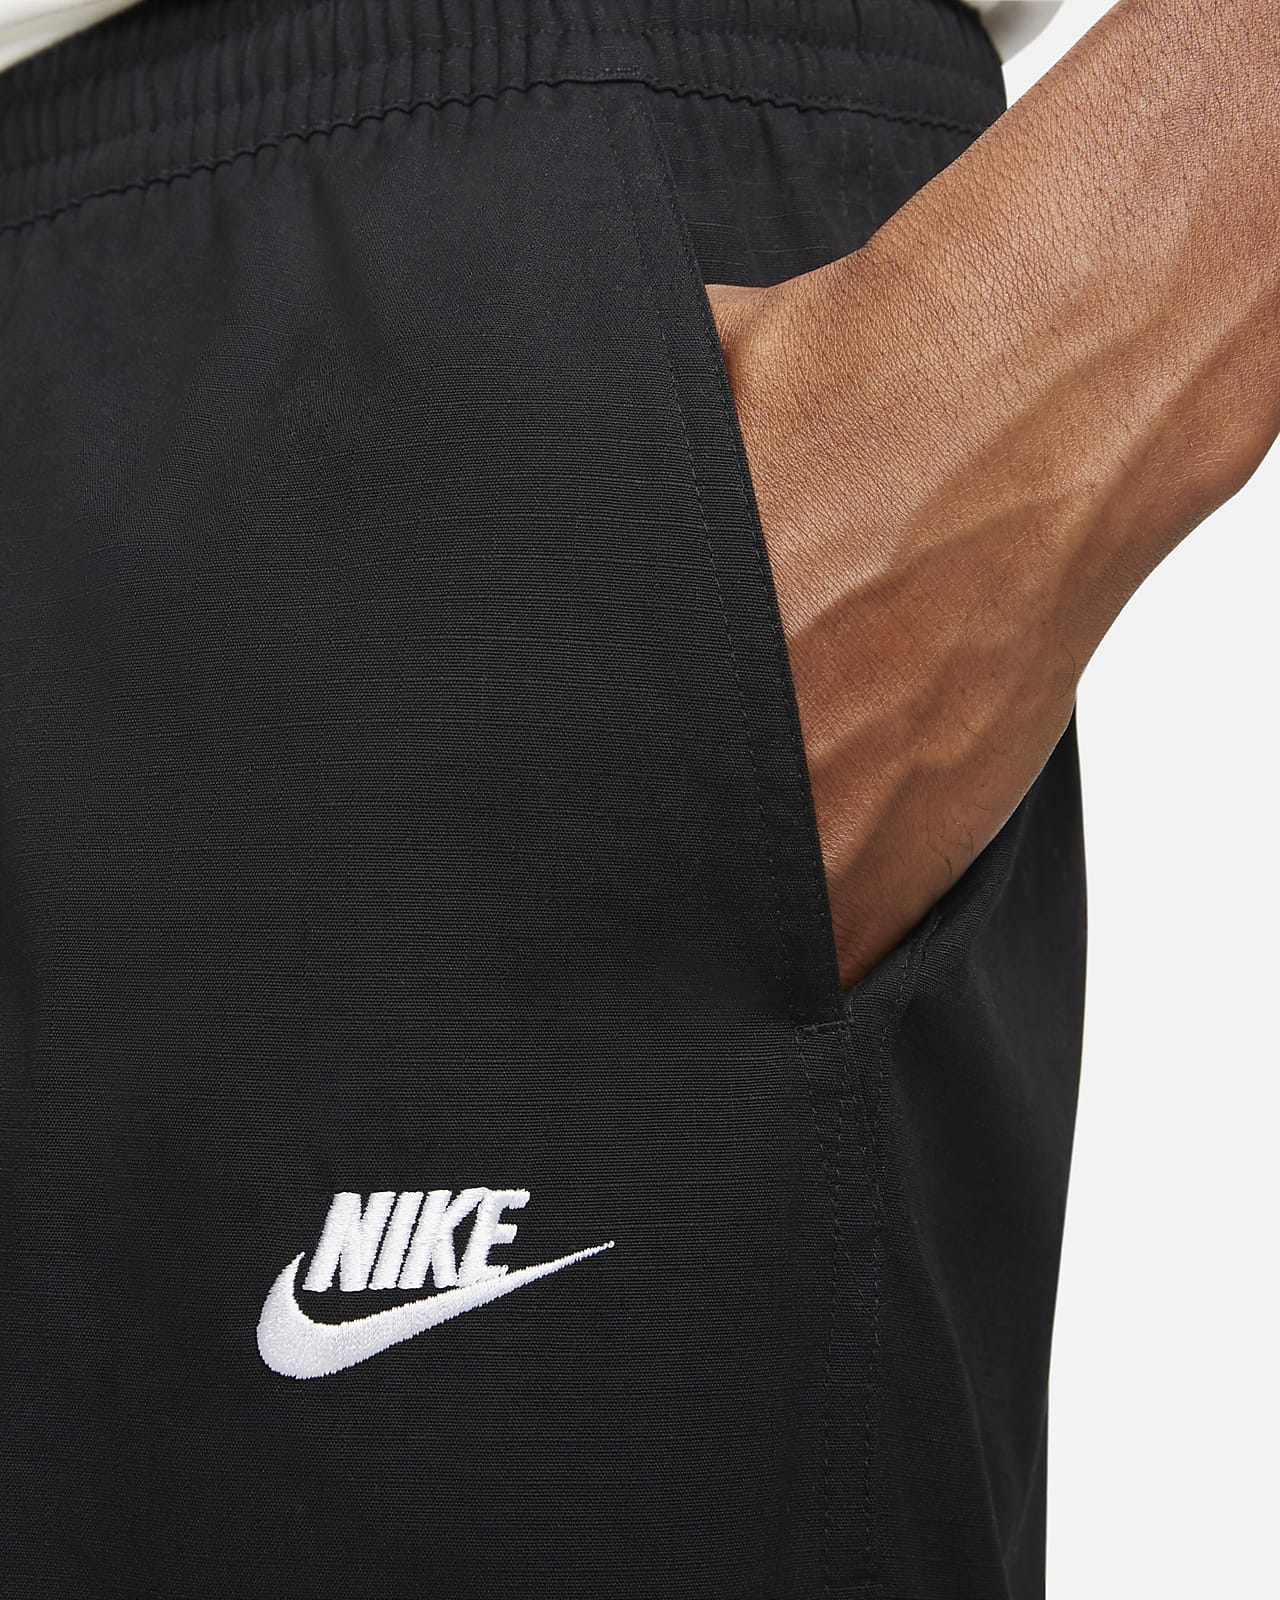 Nike Sportswear Air Max Men's Woven Cargo Trousers. Nike UK